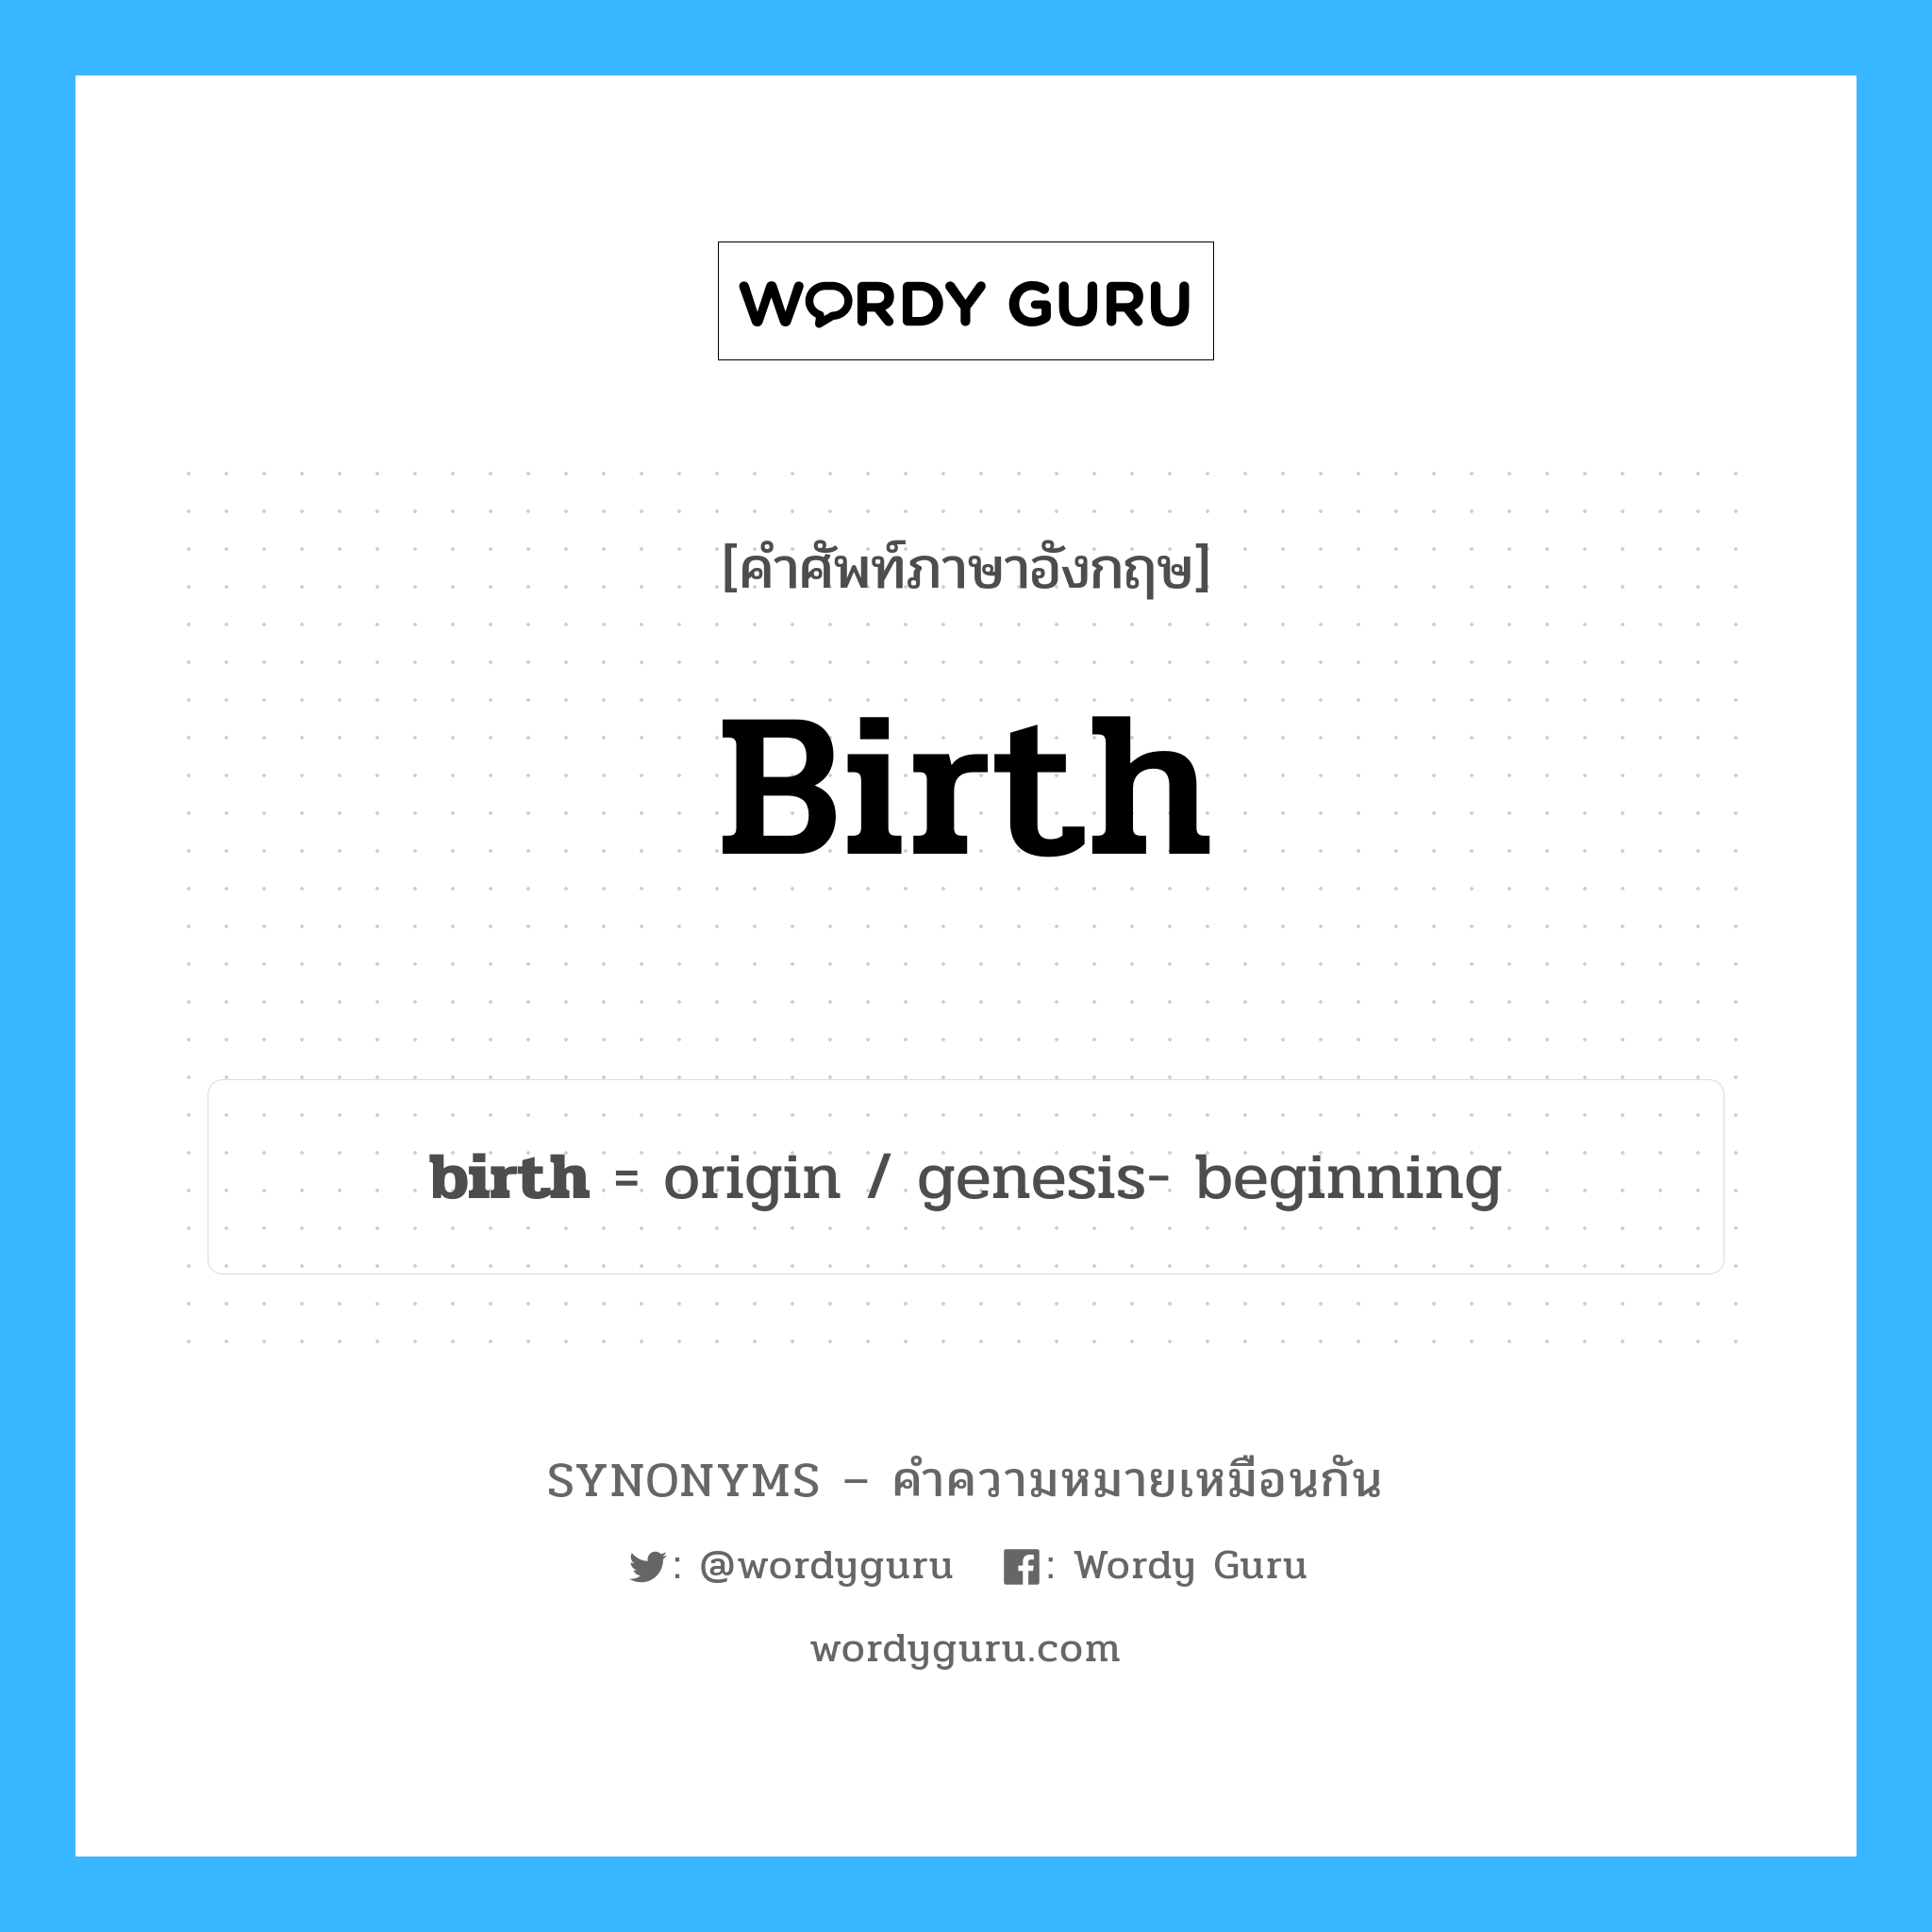 genesis- beginning เป็นหนึ่งใน birth และมีคำอื่น ๆ อีกดังนี้, คำศัพท์ภาษาอังกฤษ genesis- beginning ความหมายคล้ายกันกับ birth แปลว่า เริ่มต้นปฐมกาล หมวด birth